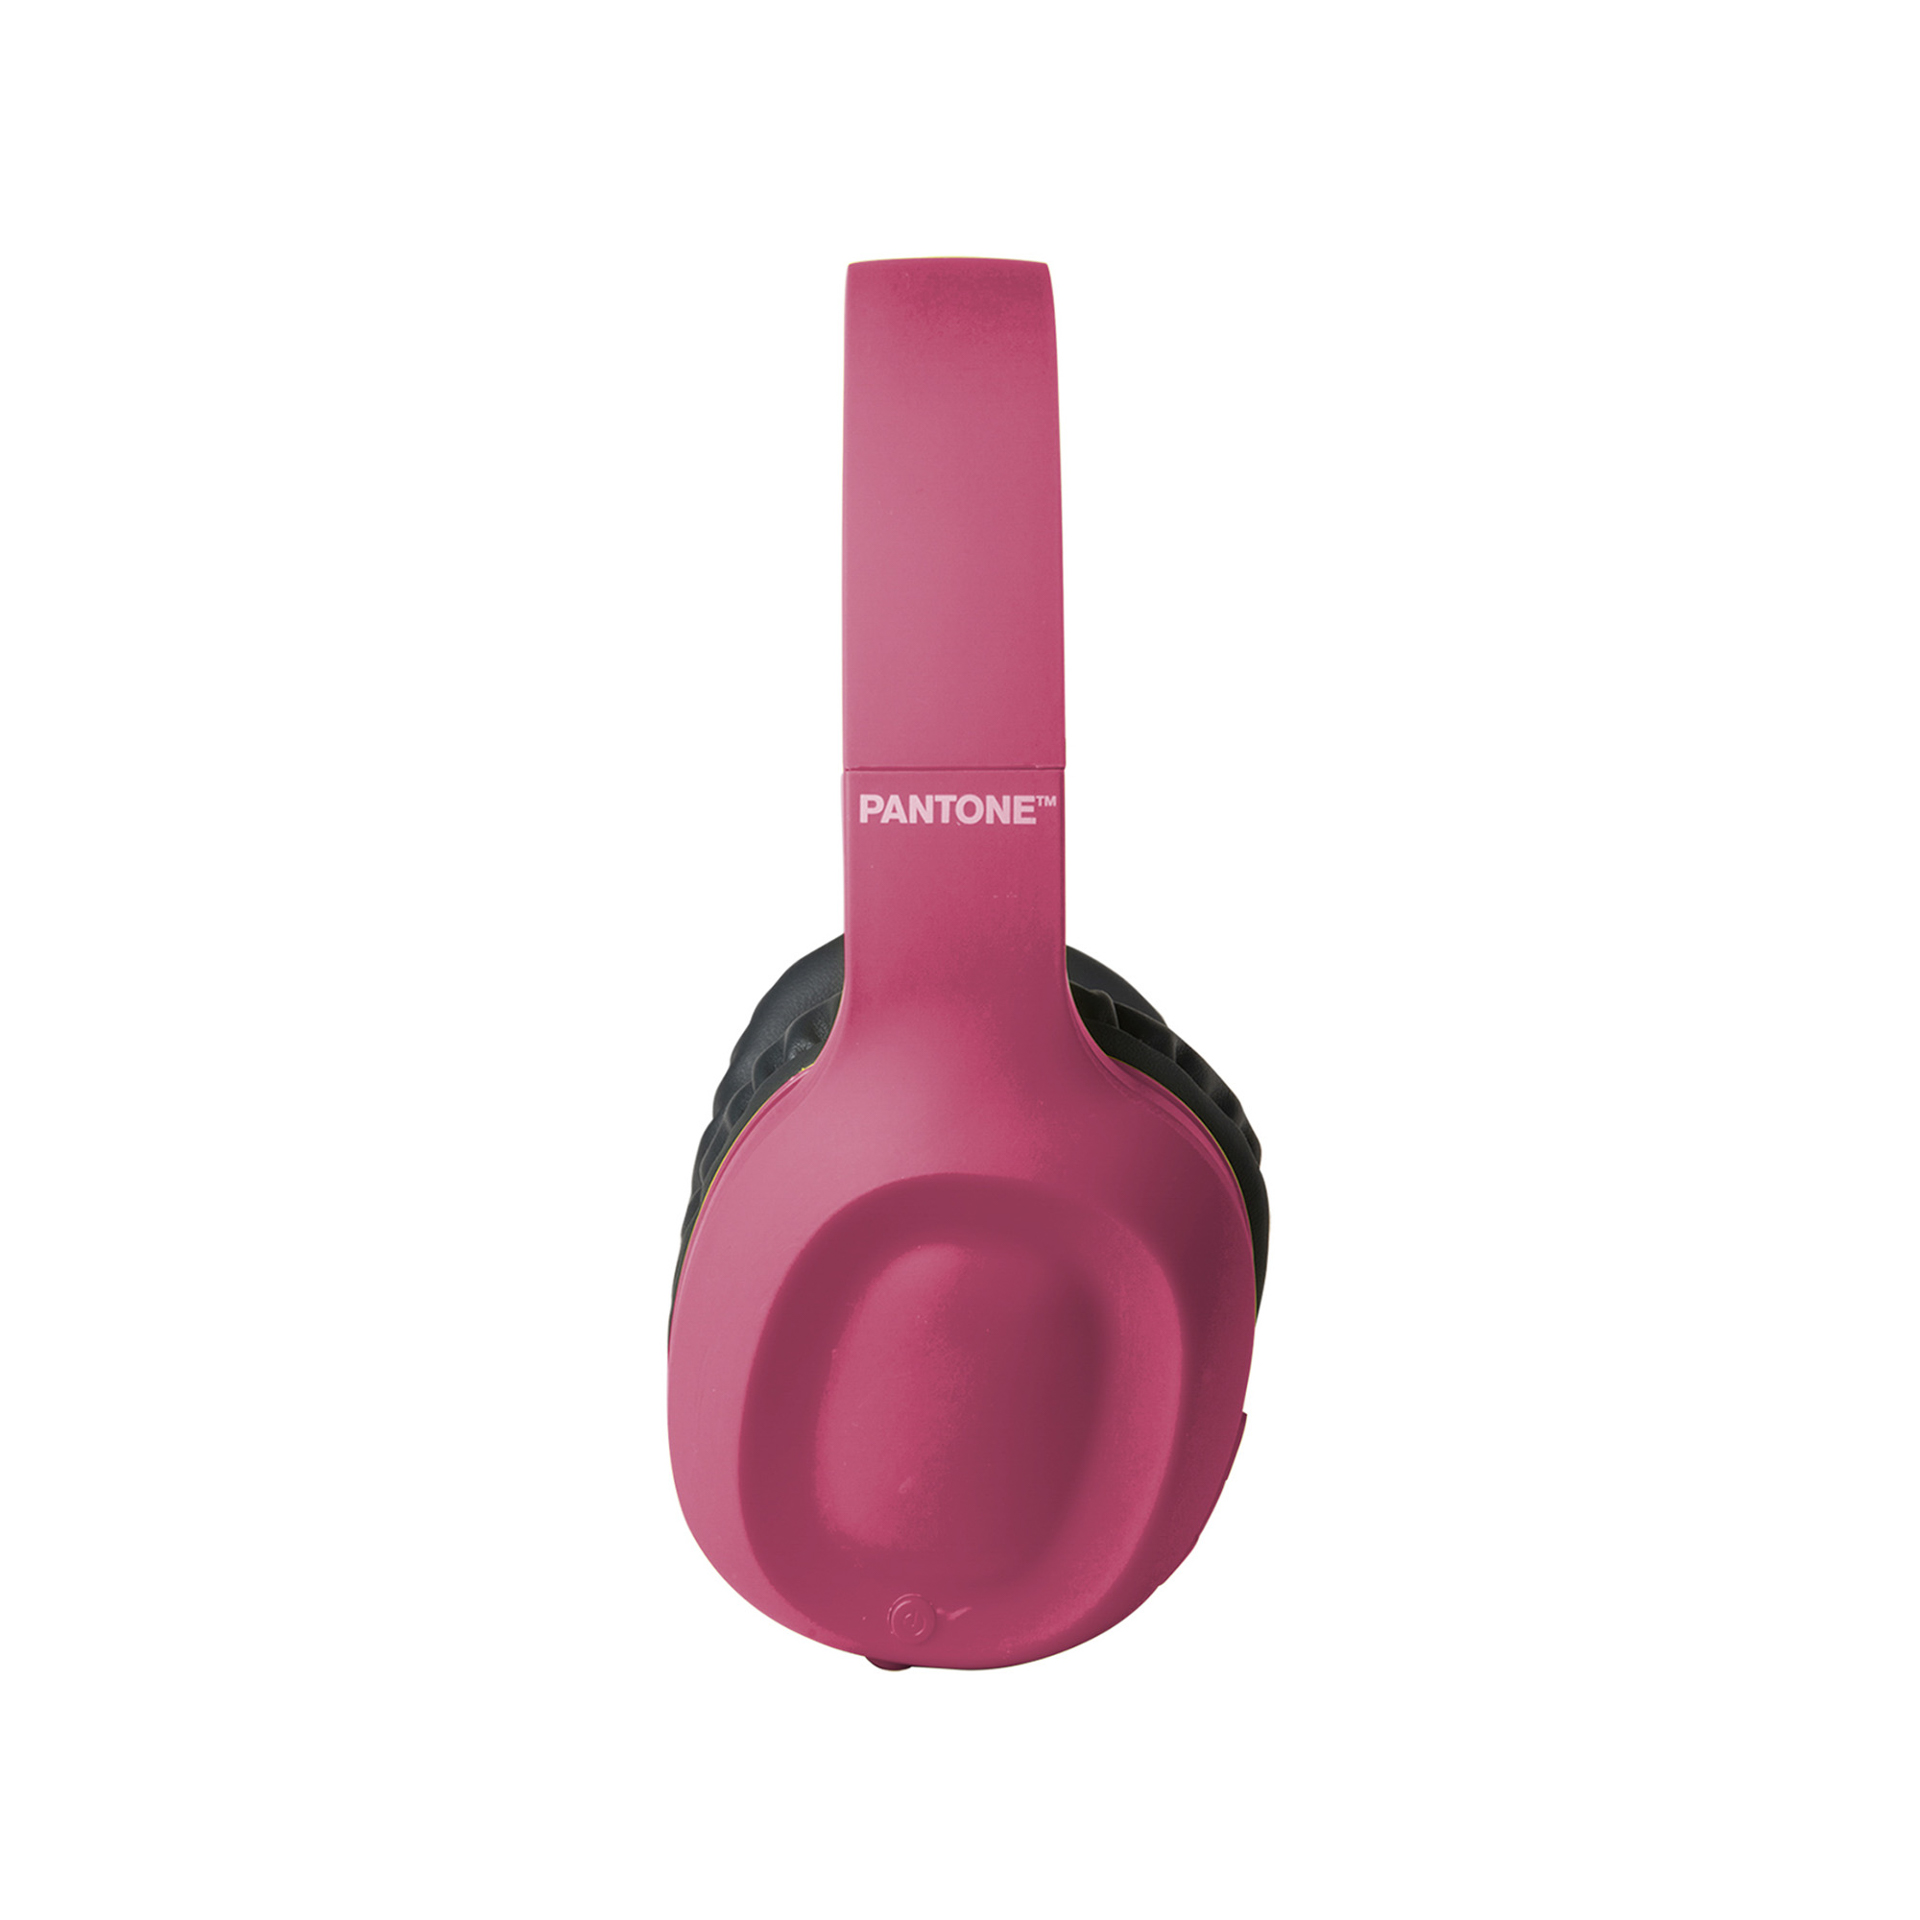 Cuffie stereo Bluetooth wireless linea Pantone - rosa, rosa, large